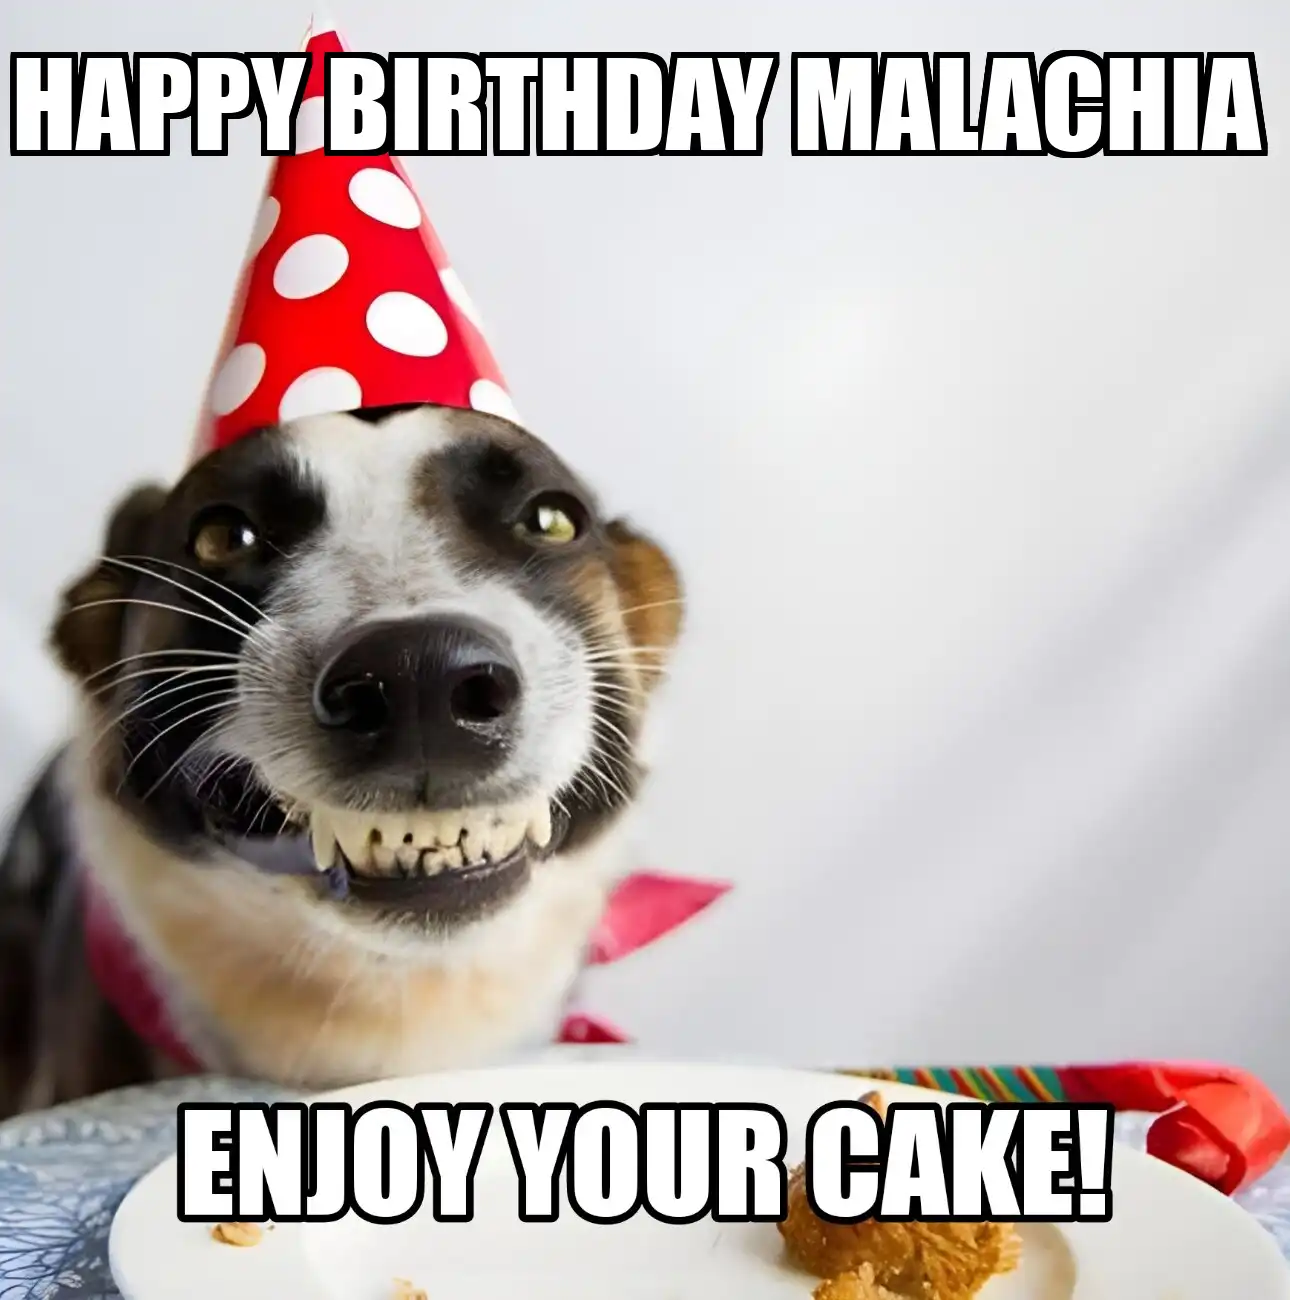 Happy Birthday Malachia Enjoy Your Cake Dog Meme